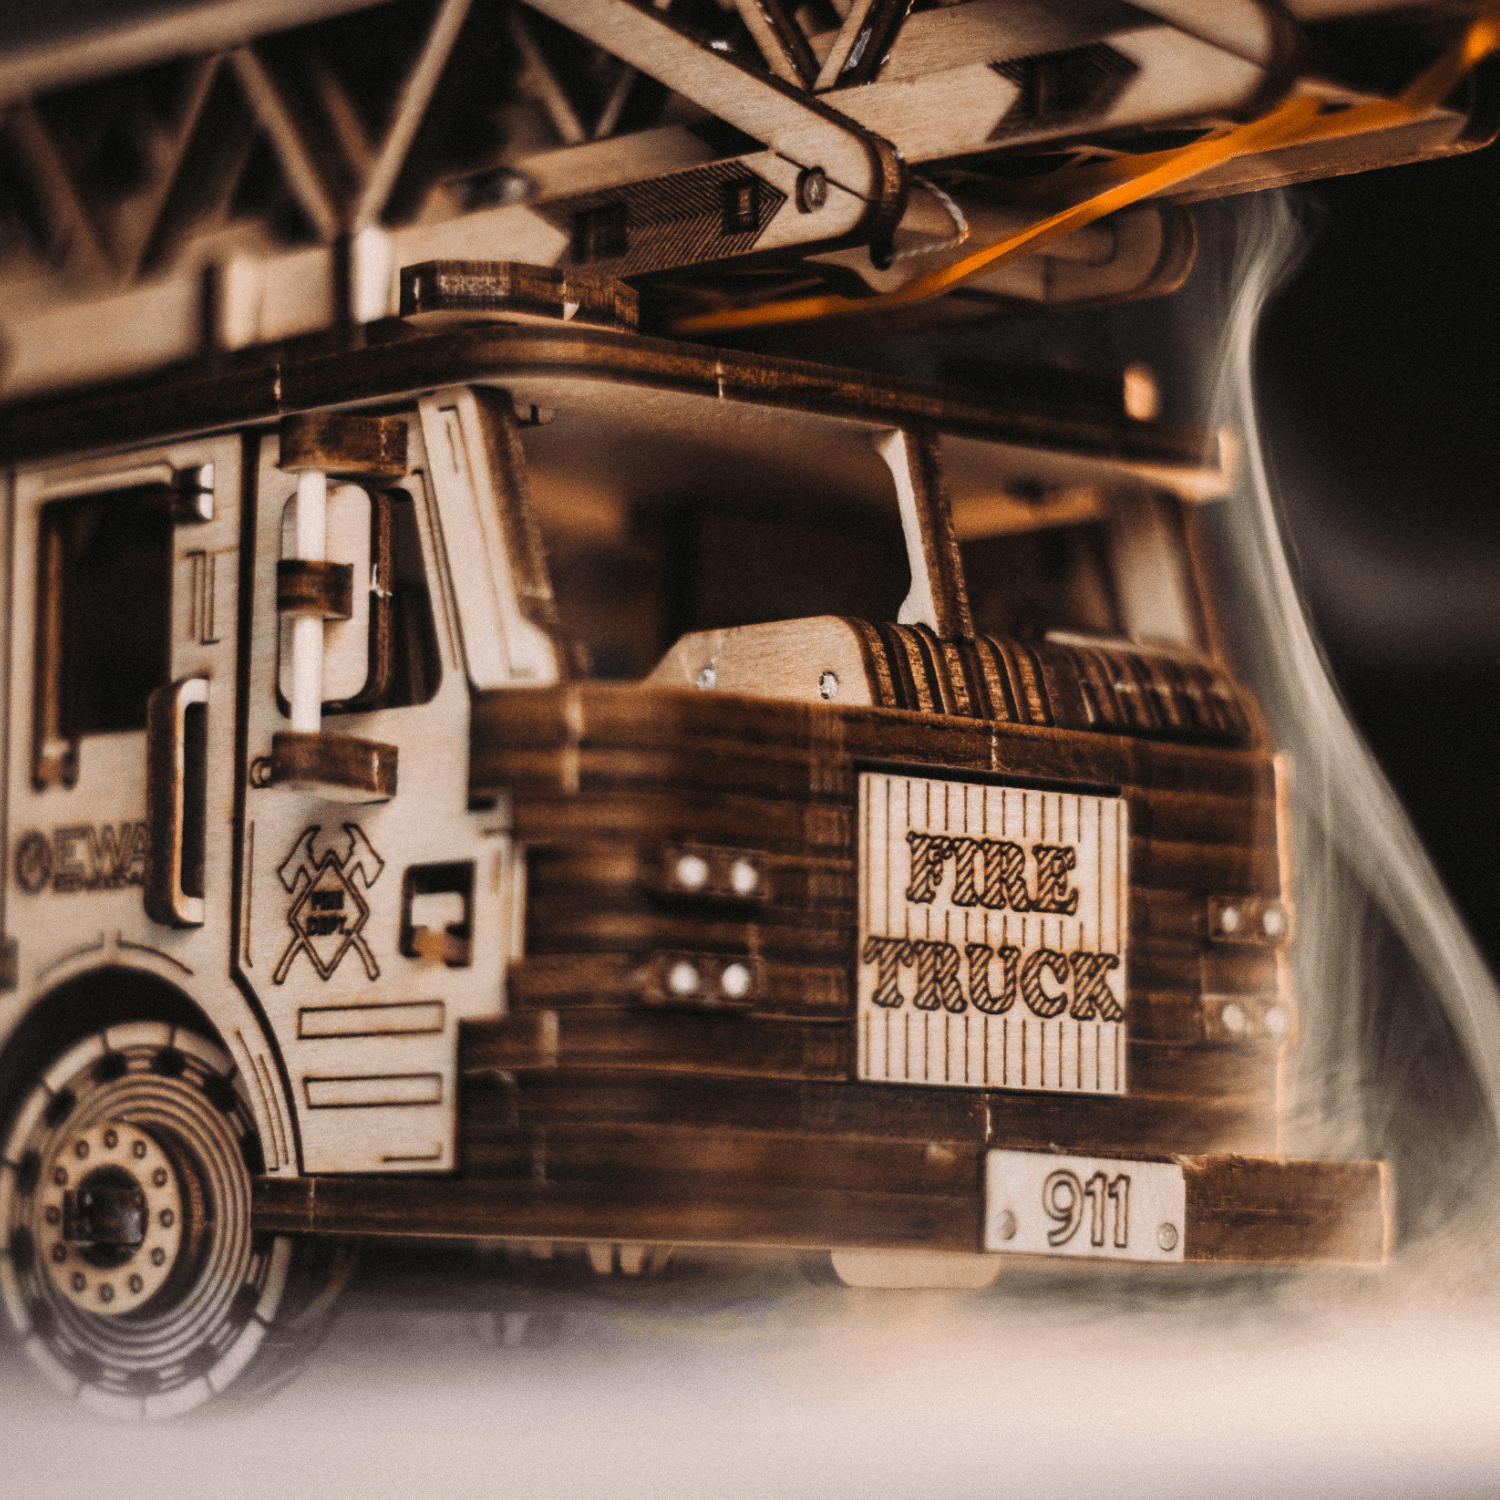 Mechanical wooden truck kit 🚚 - Build now!